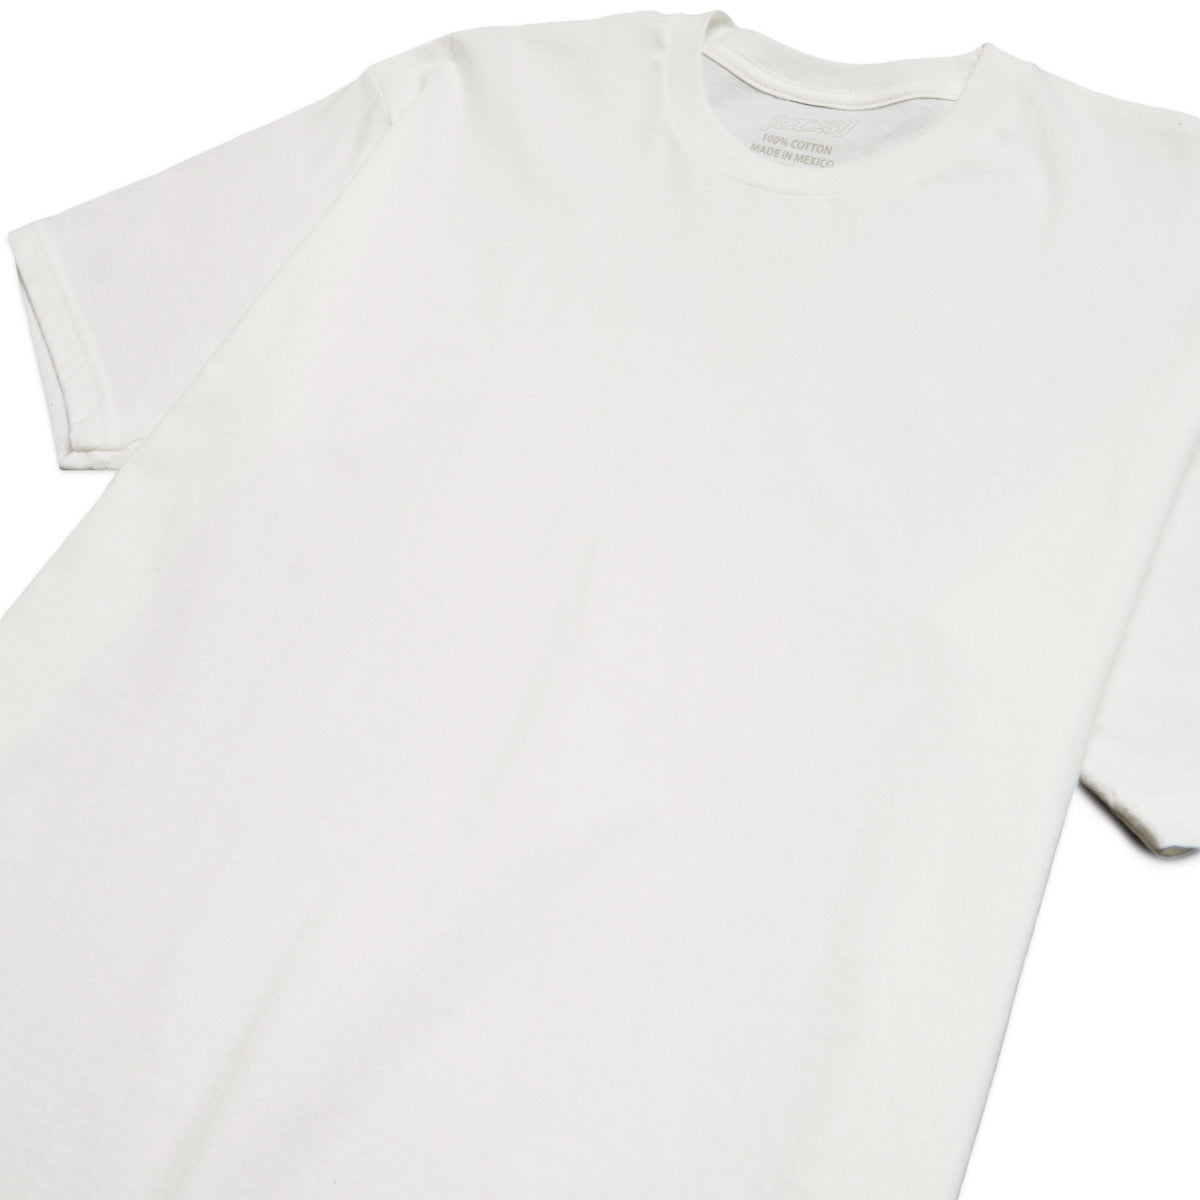 CCS Original Heavyweight T-Shirt - White image 2